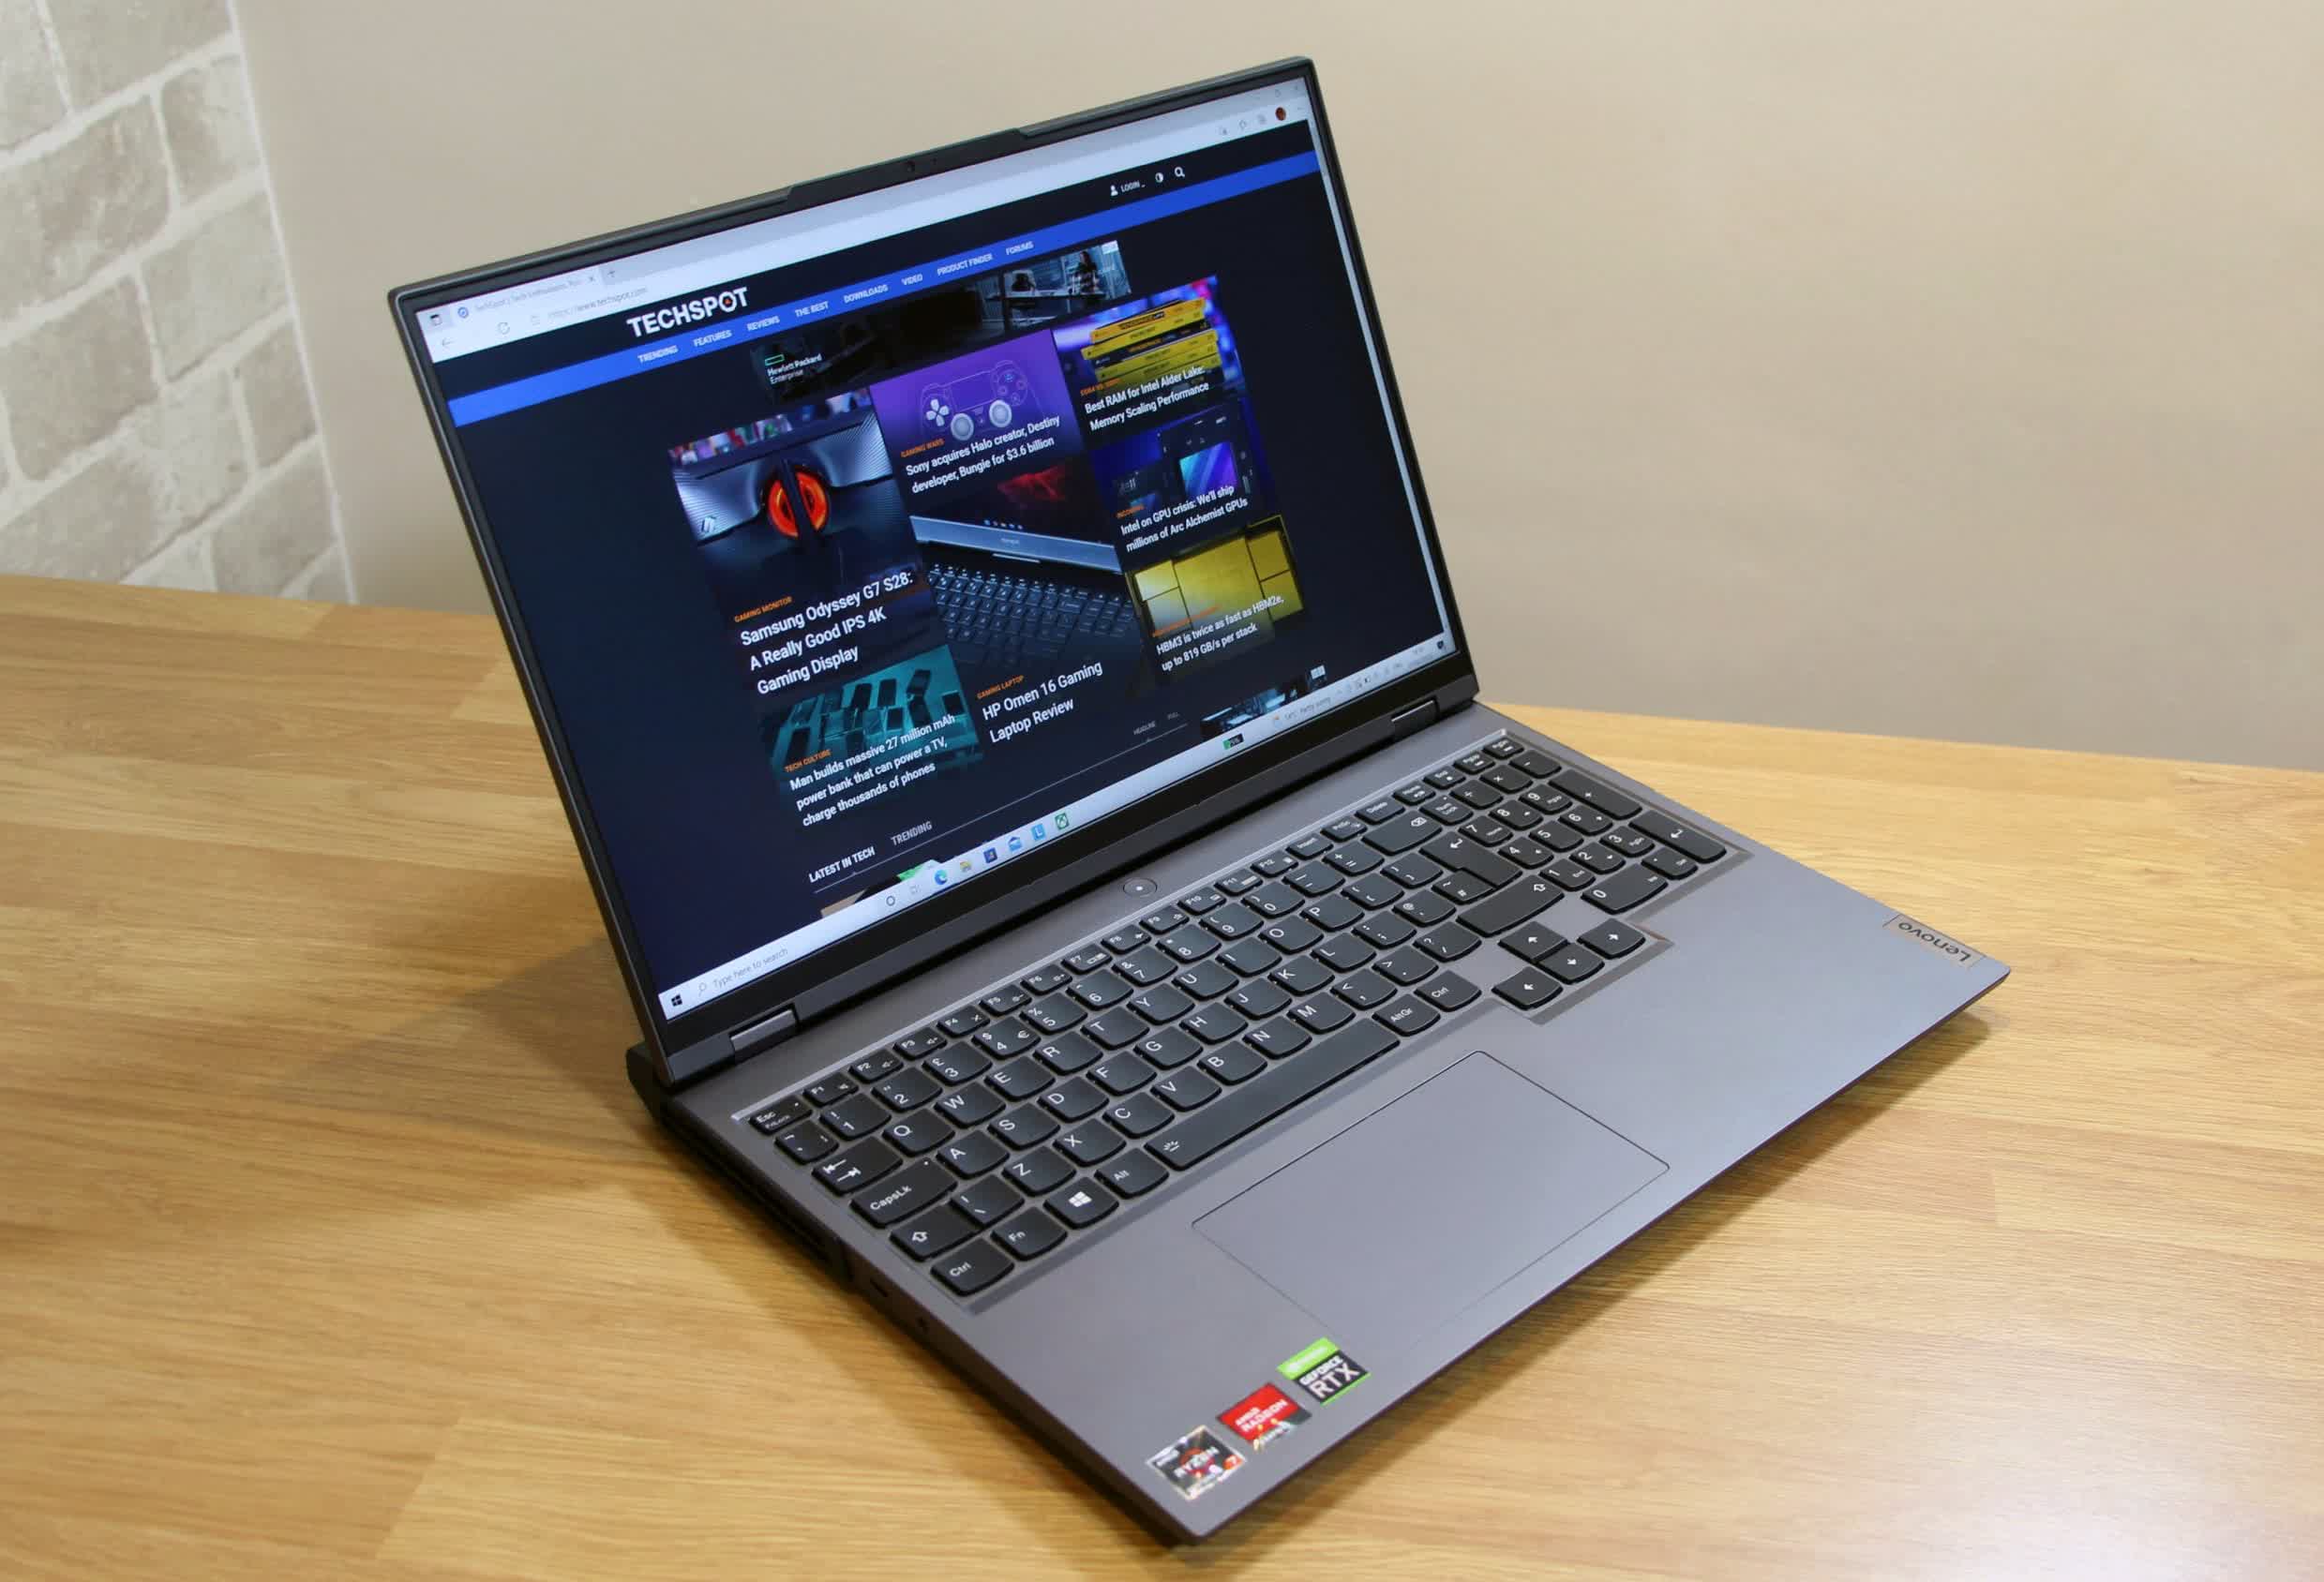 Lenovo Legion 5 Pro Laptop Review | TechSpot